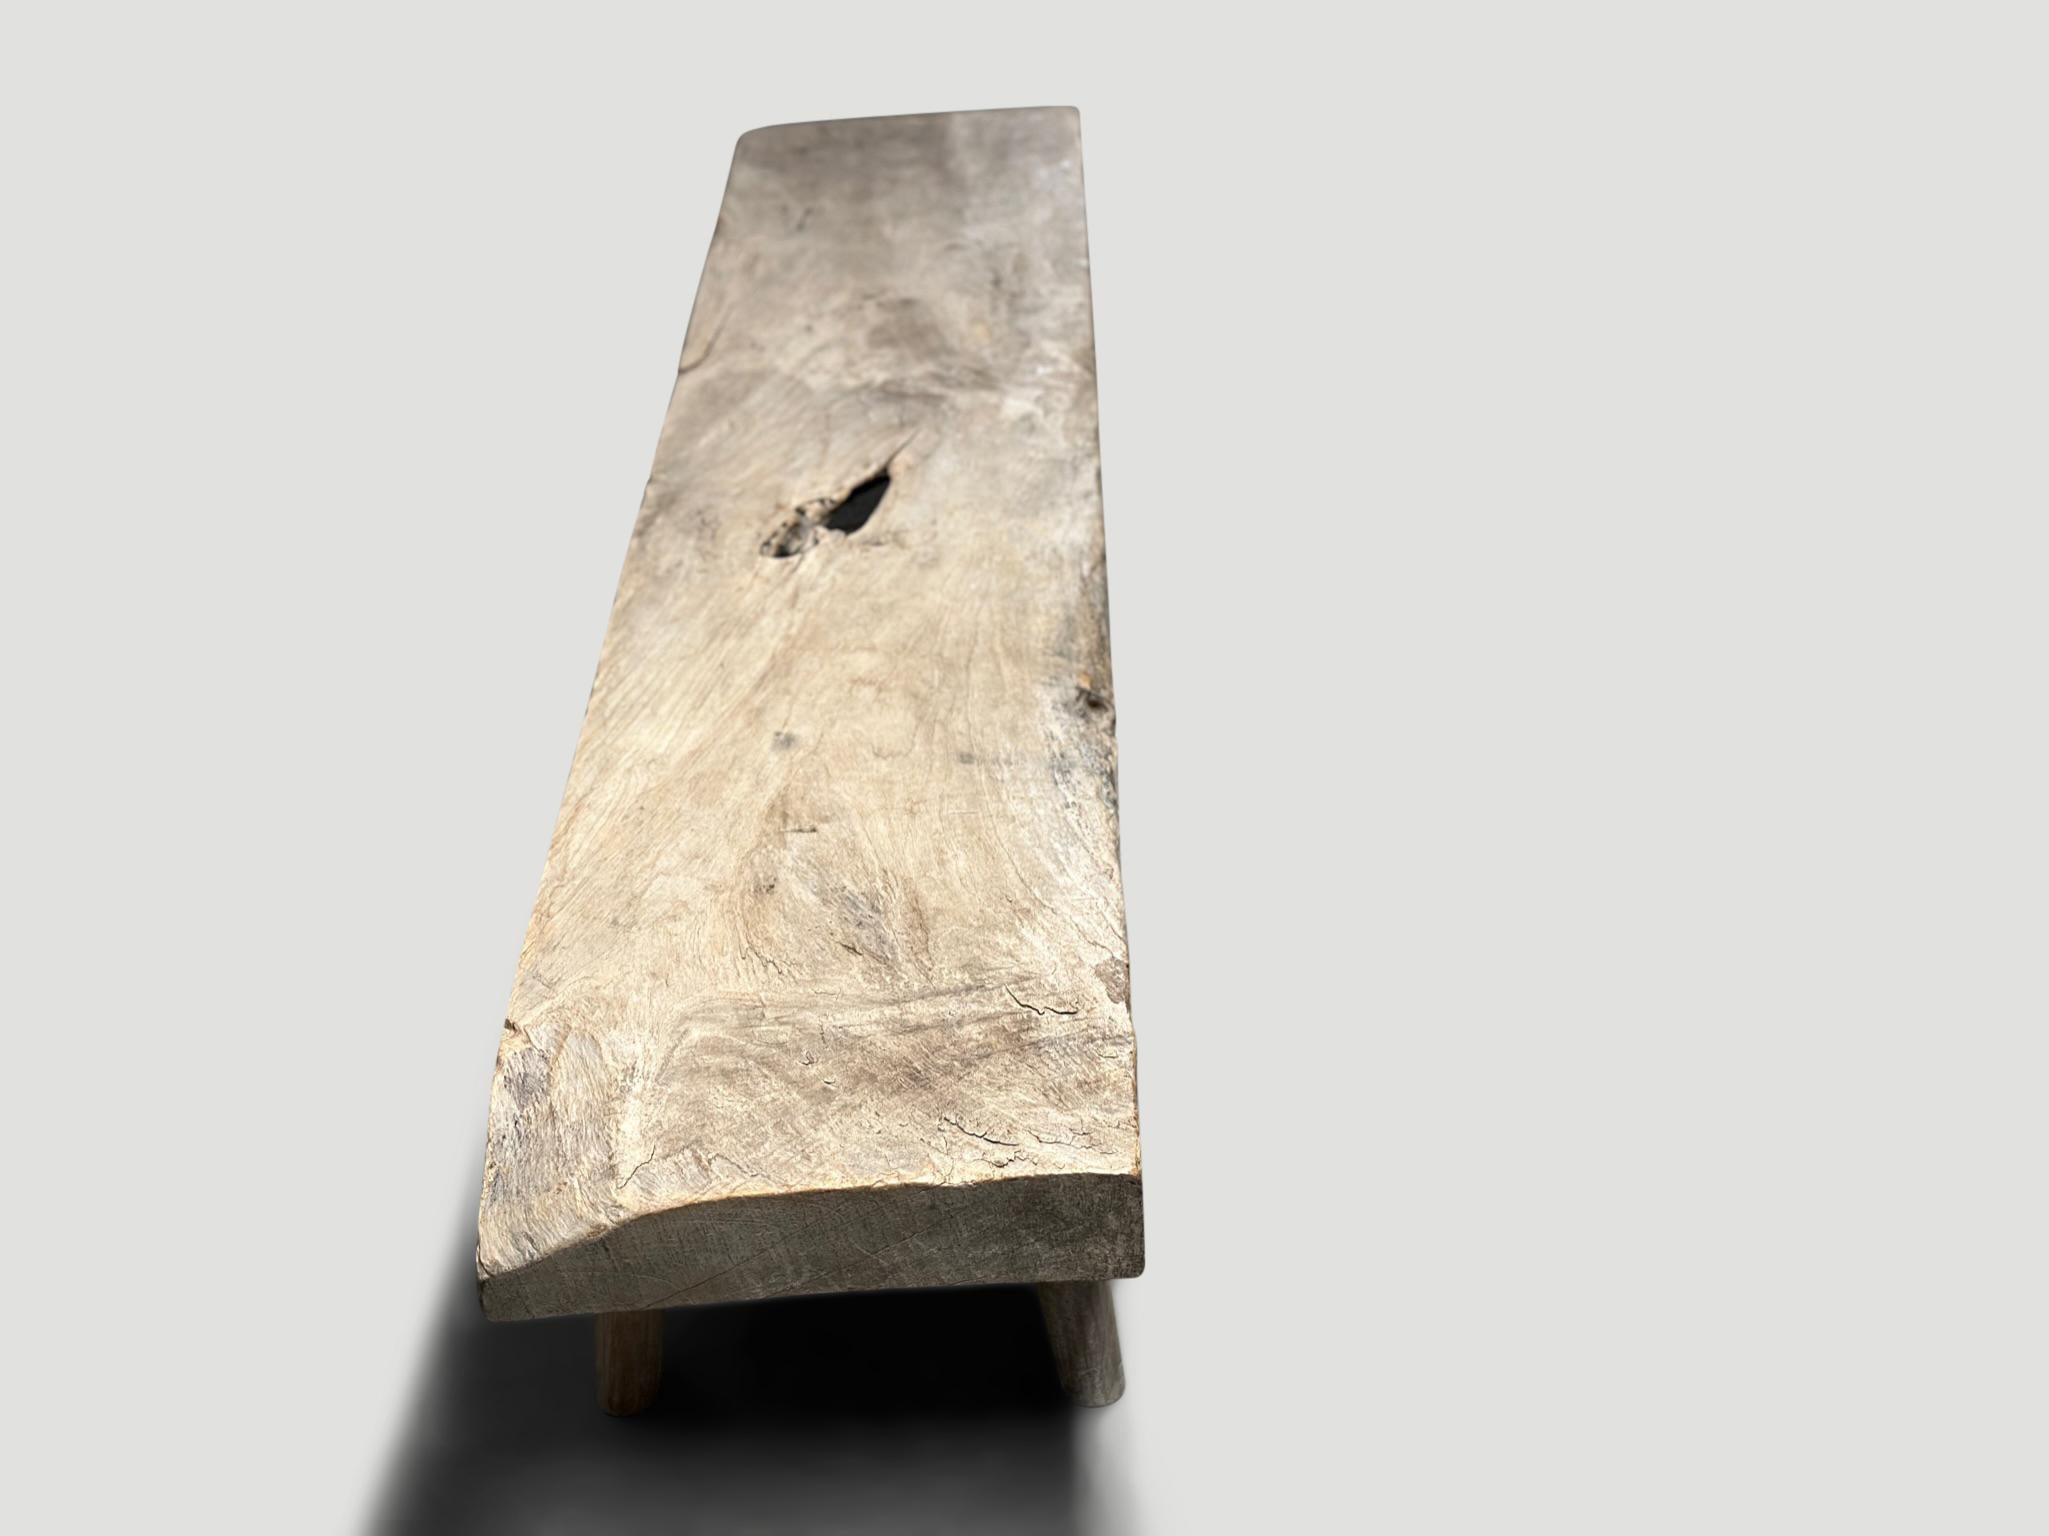 Rustic Andrianna Shamaris Sculptural Antique Teak Wood Bench  For Sale